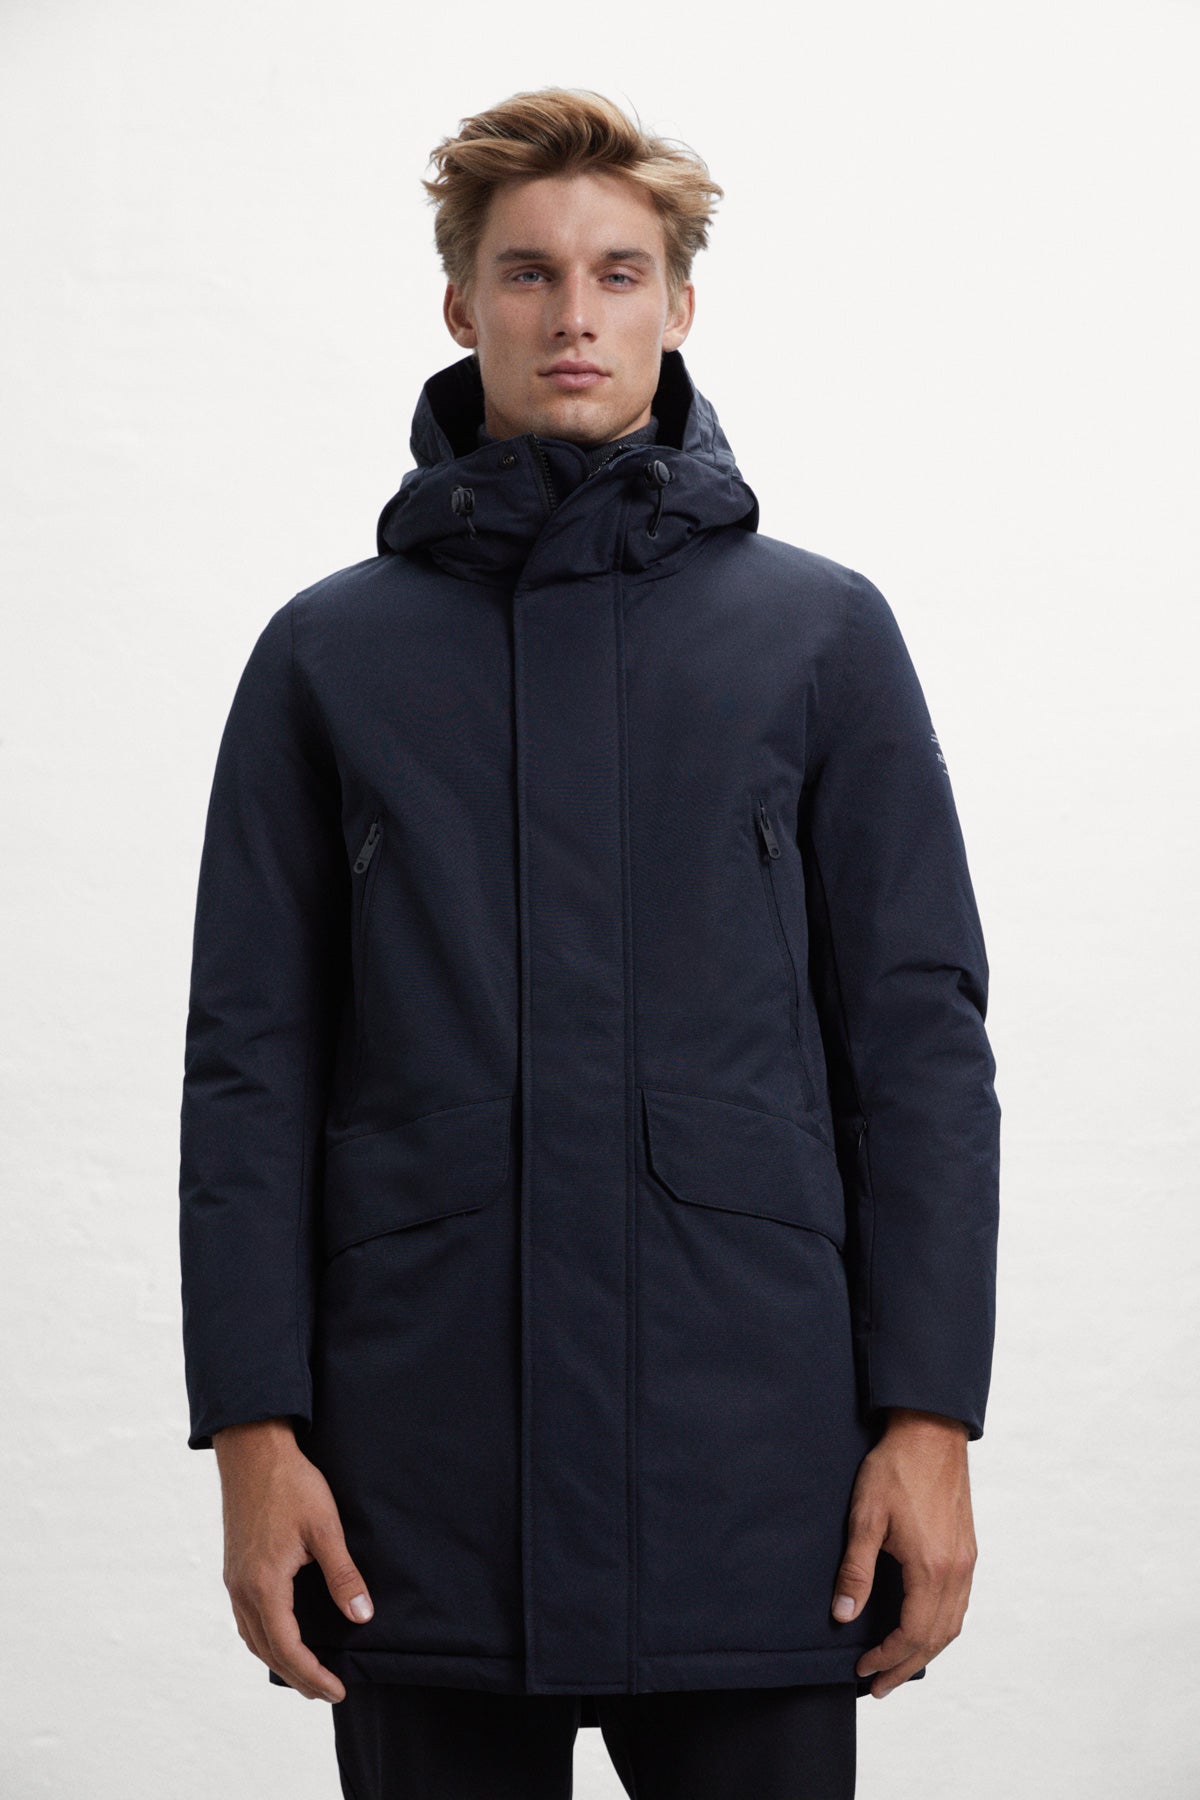 Iceberg jacket with a hood for the rain | ECOALF